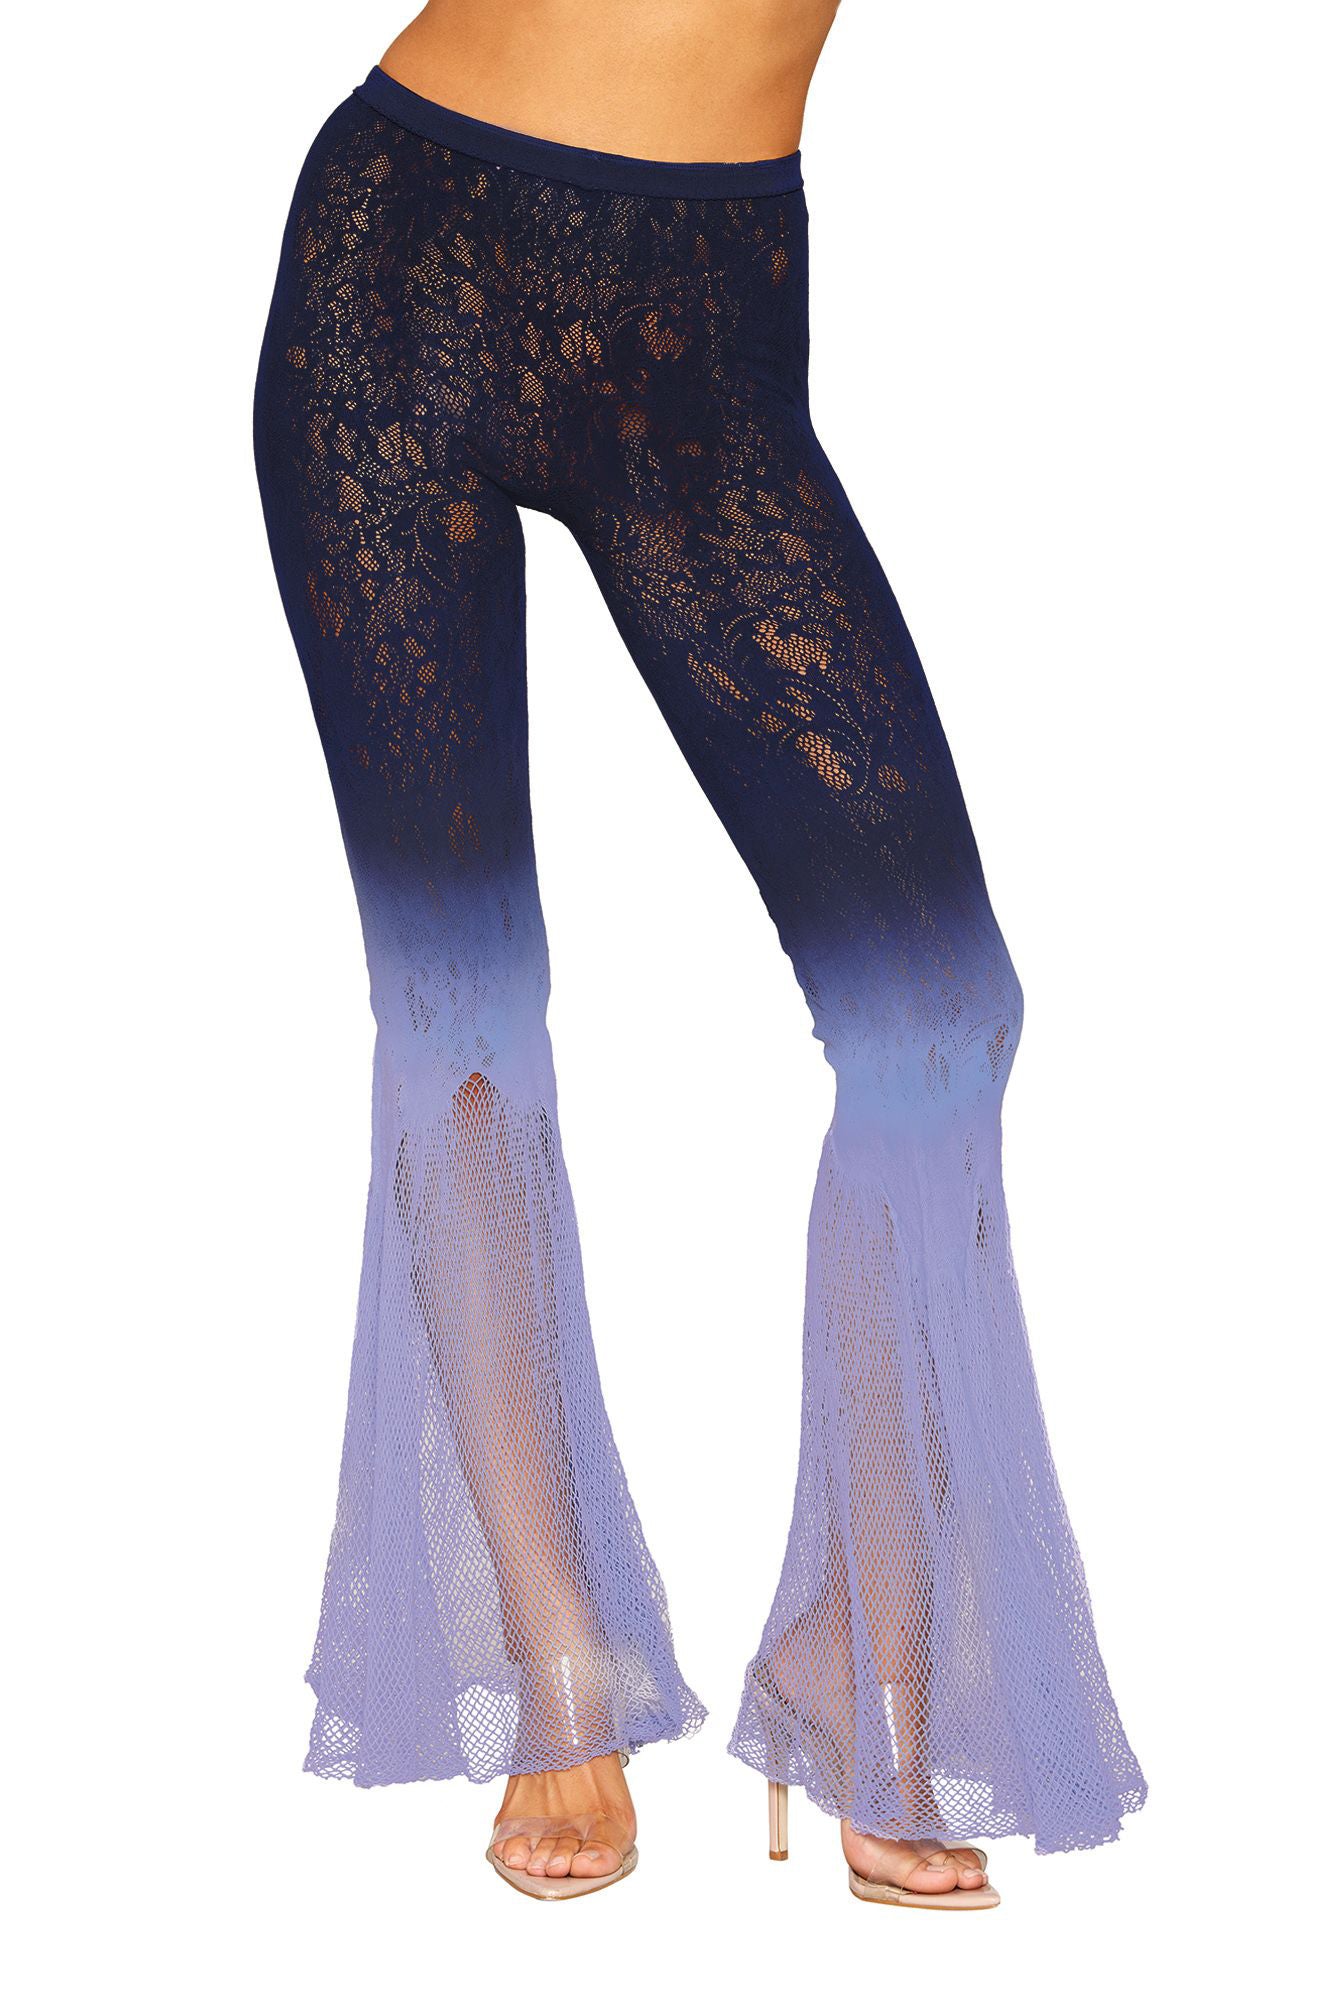 Flair Leg Pantyhose - One Size - Denim/hydrangea DG-0500DNHYDOS